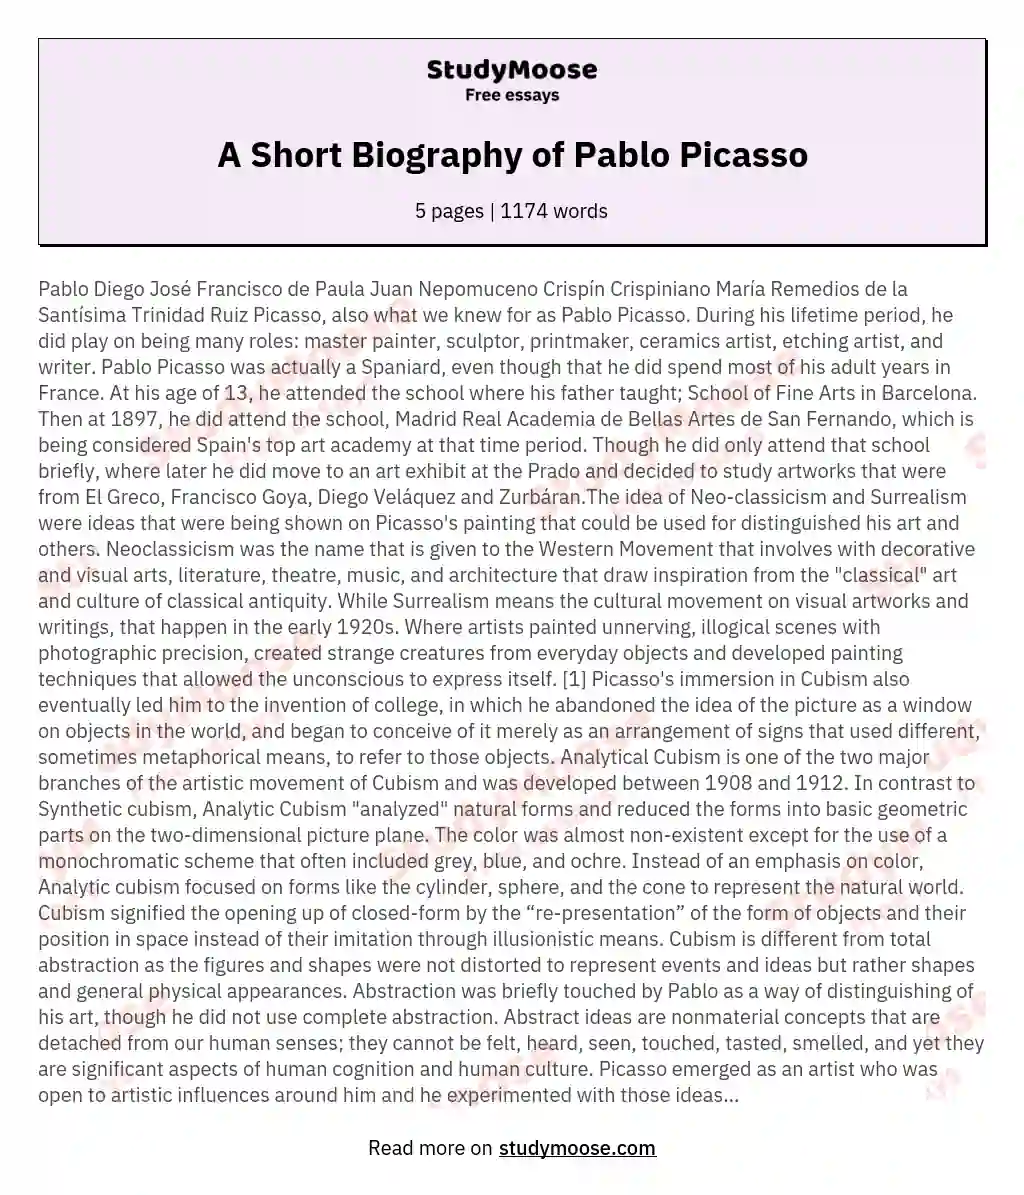 A Short Biography of Pablo Picasso essay